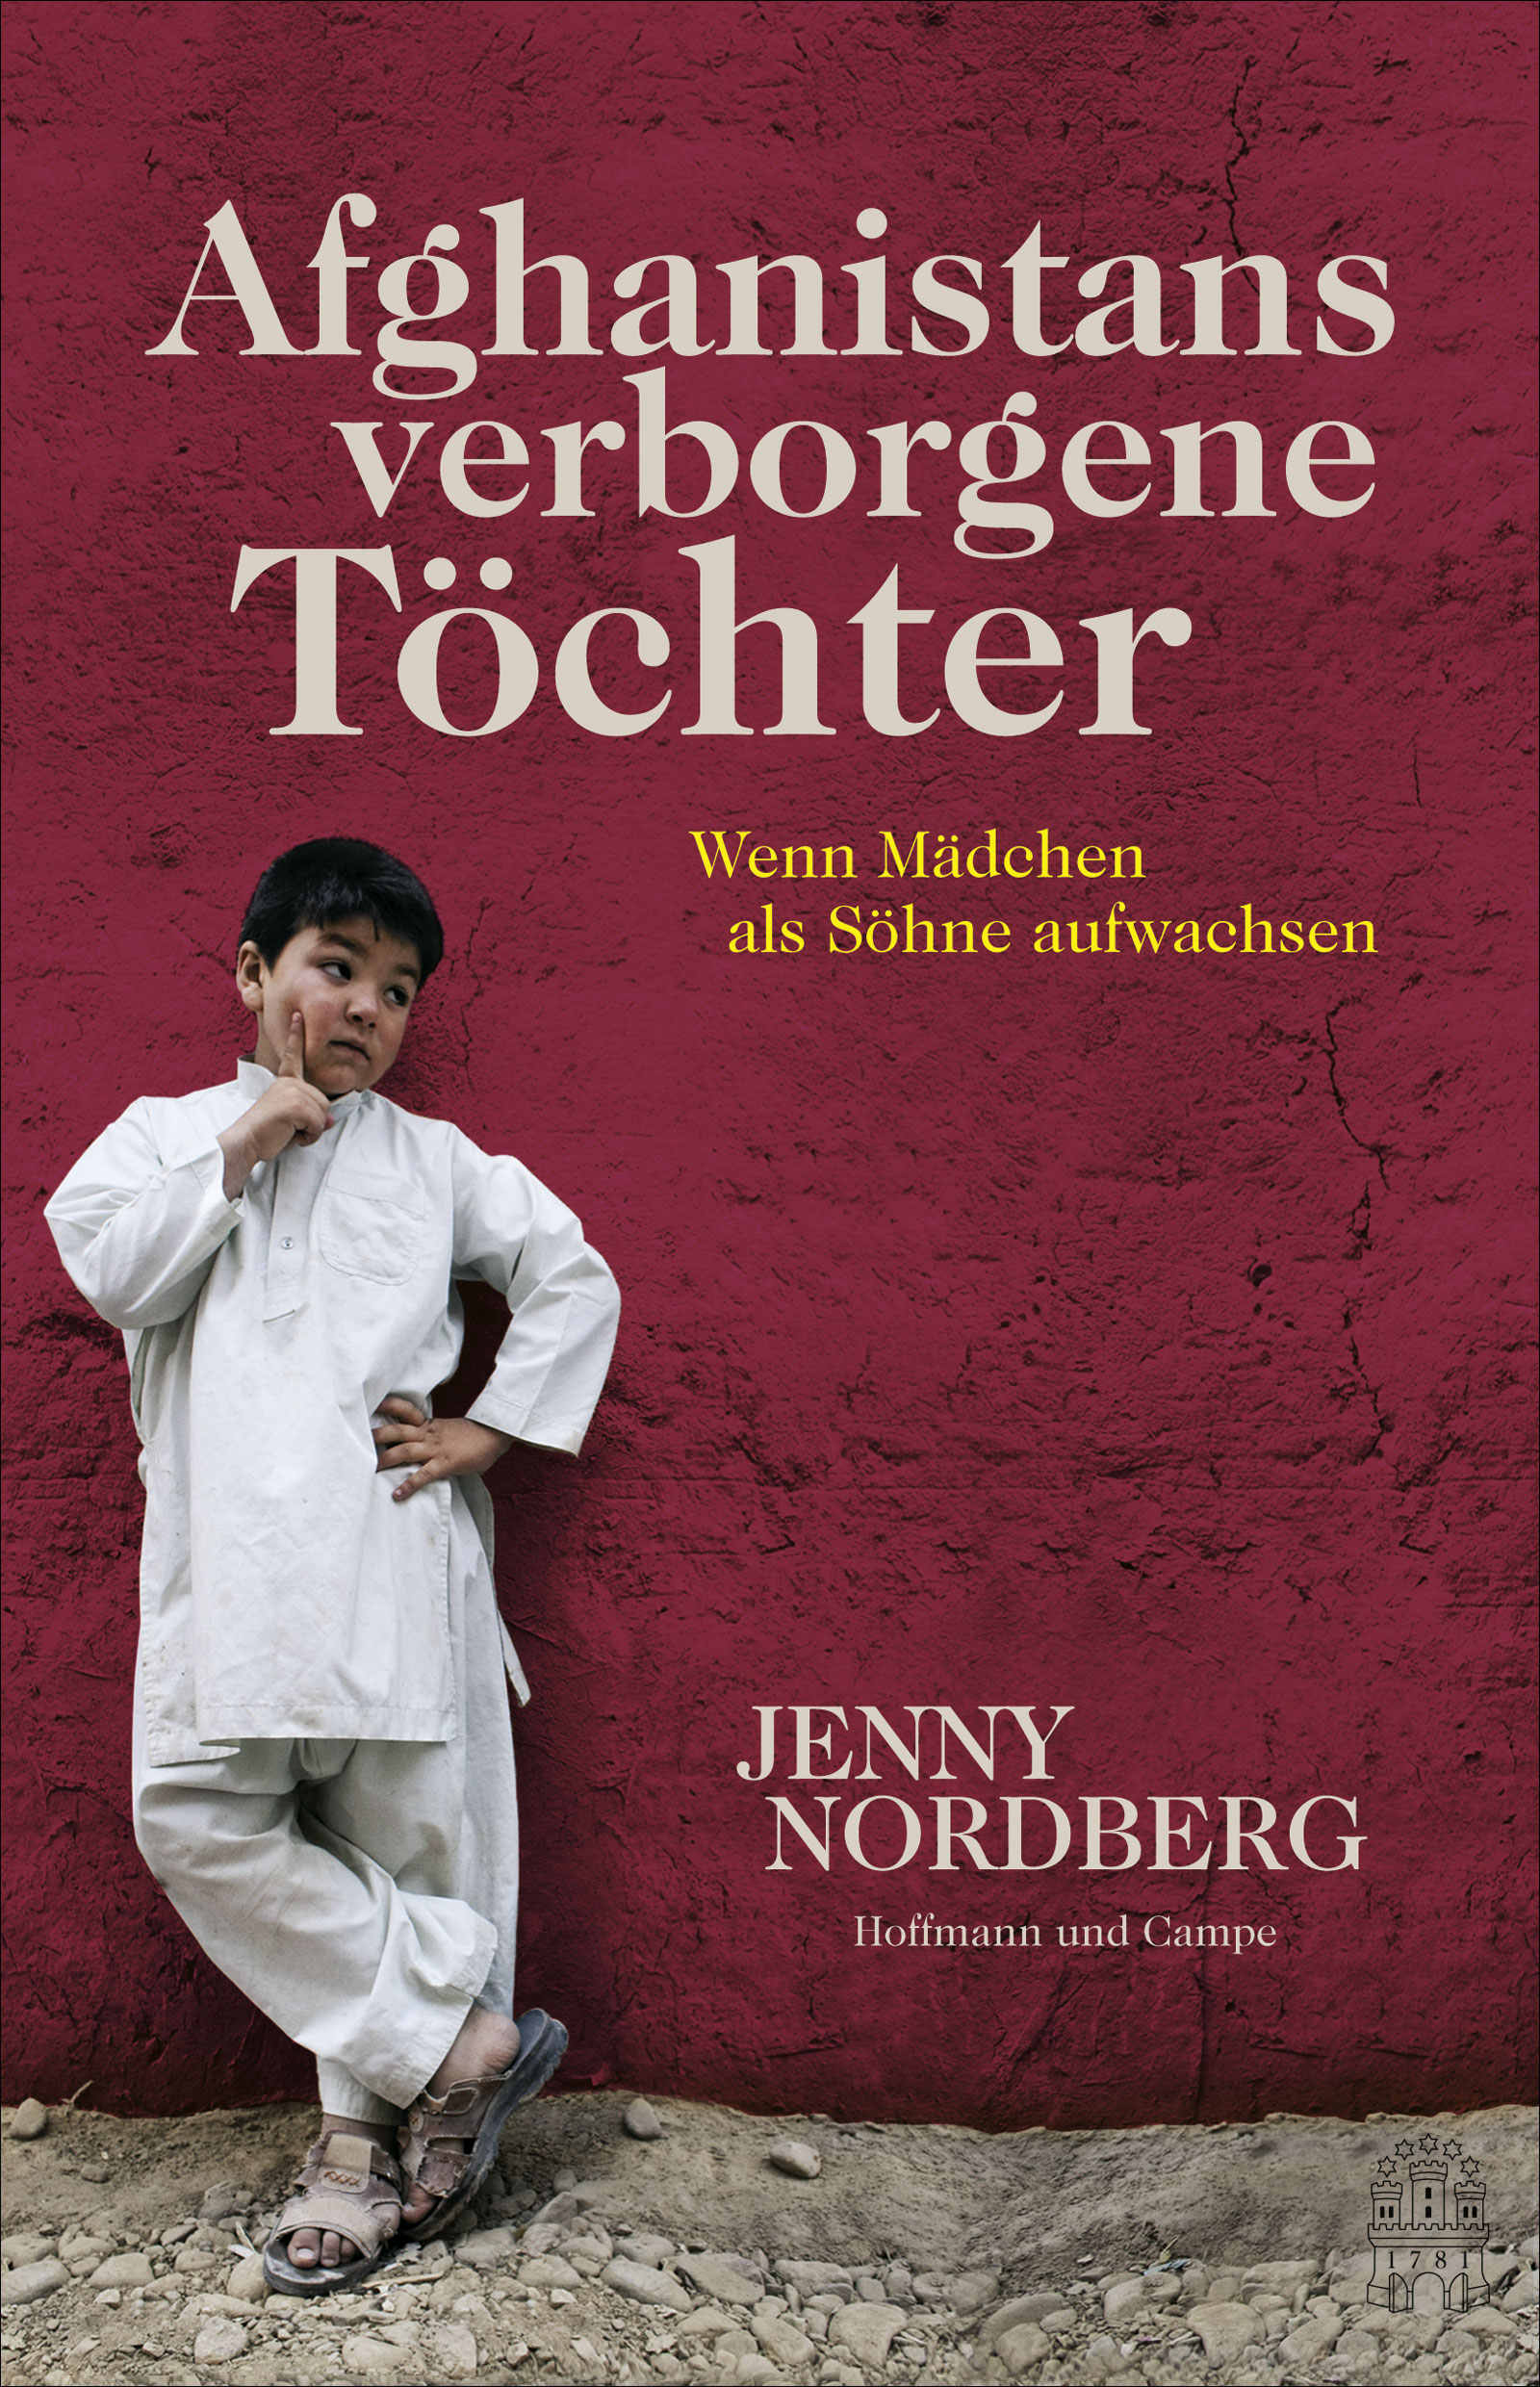 Buchcover "Afghanistans verborgene Töchter" von  Jenny Nordberg im Verlag Hoffmann &amp; Campe